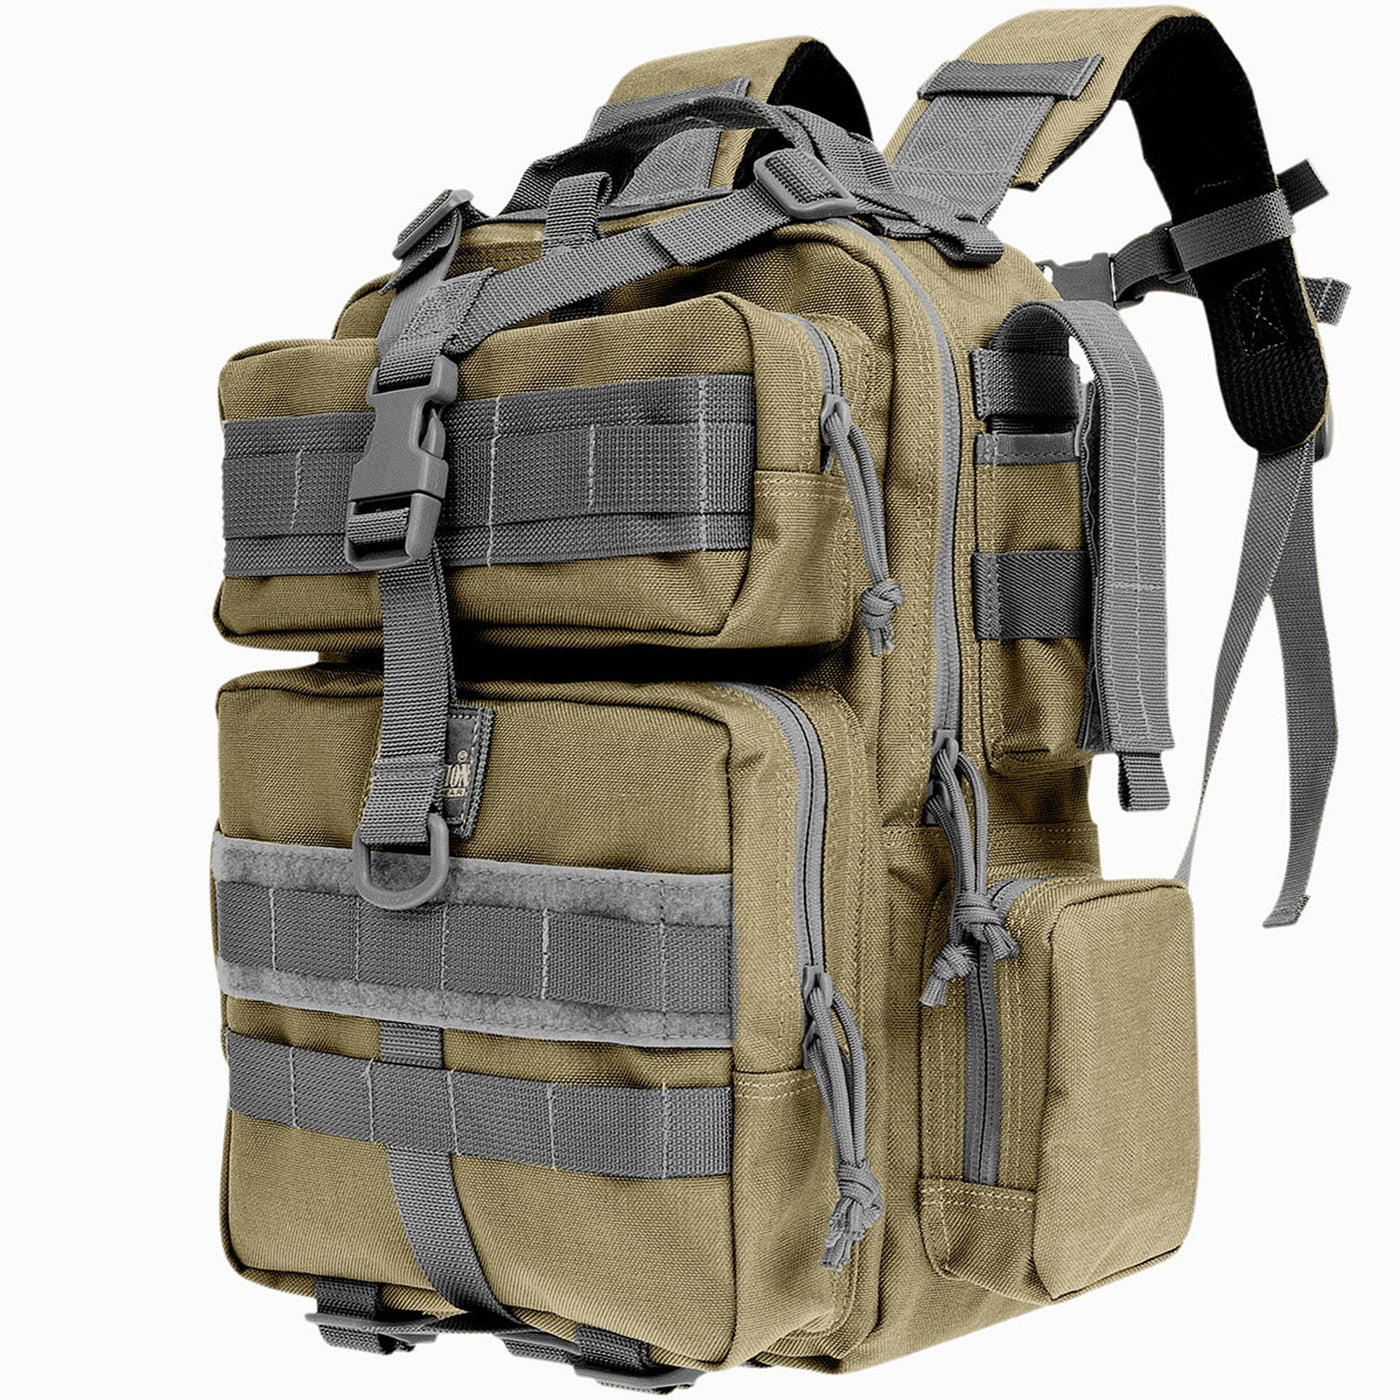 Maxpedition Maxpedition Typhoon Backpack Khaki/g Soft Gun Cases